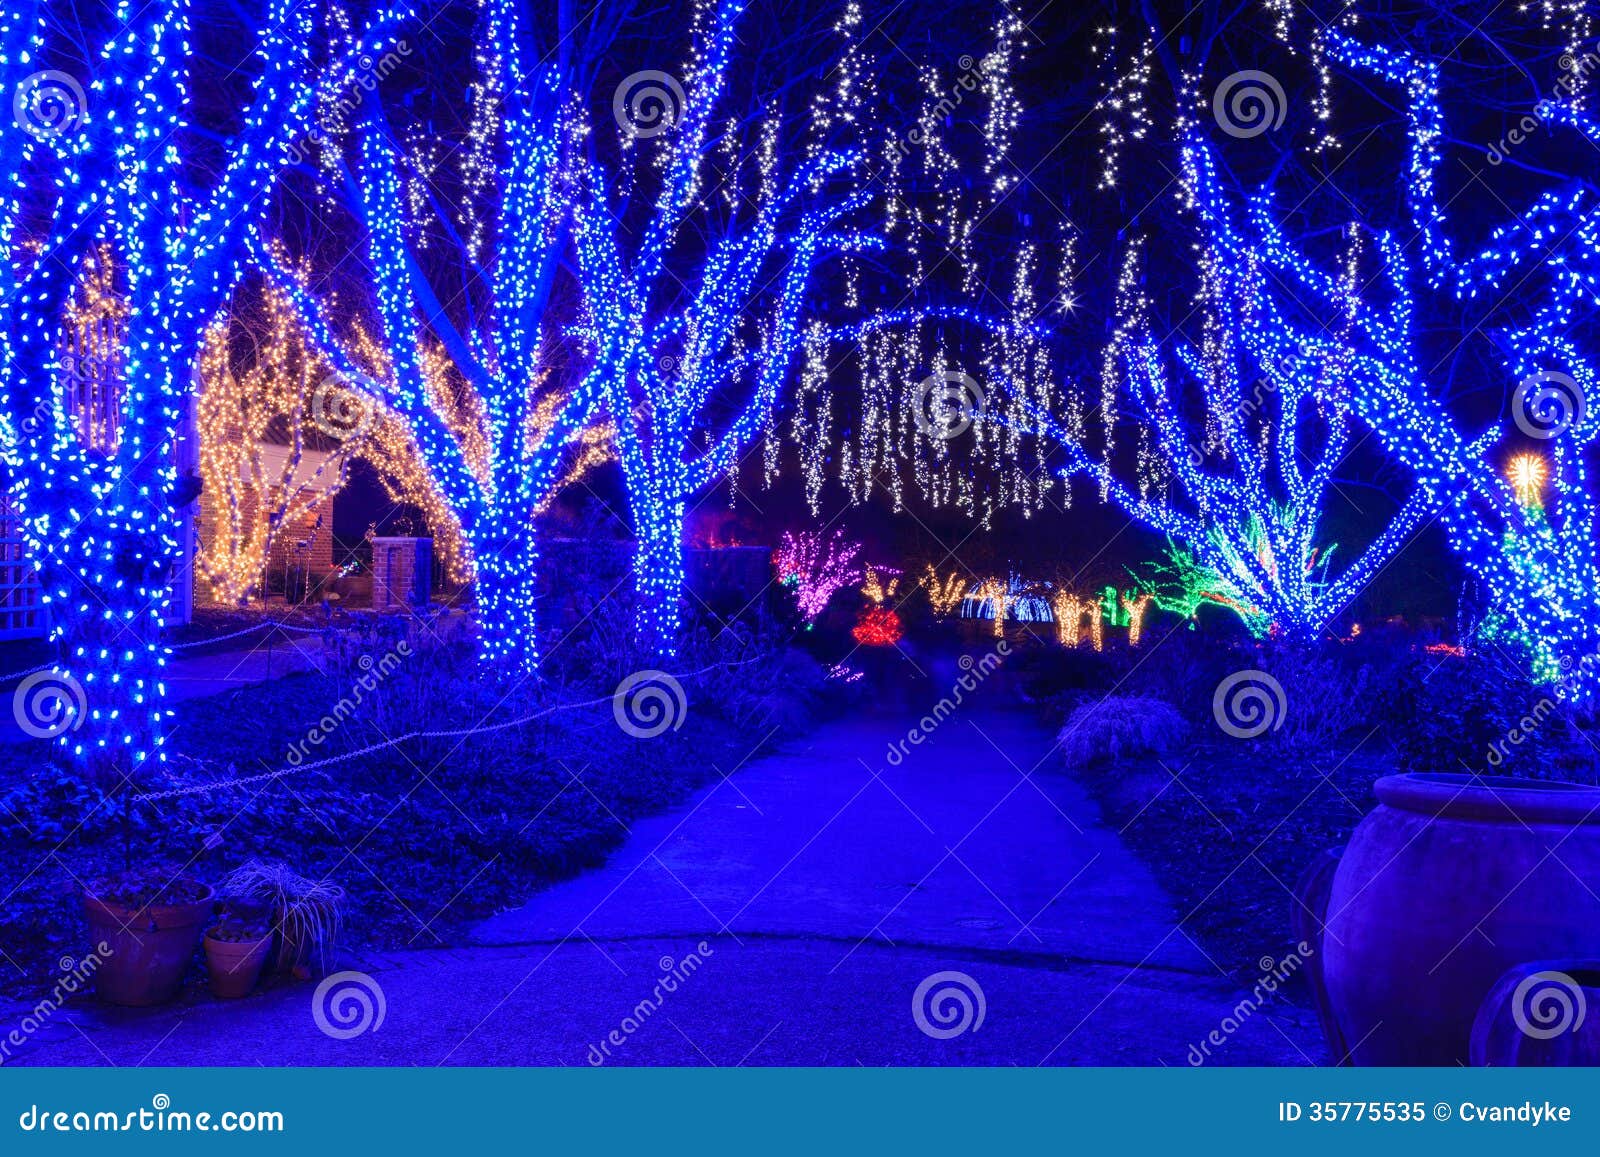 Virginia Holiday Festival Walk Of Lights Stock Image Image Of